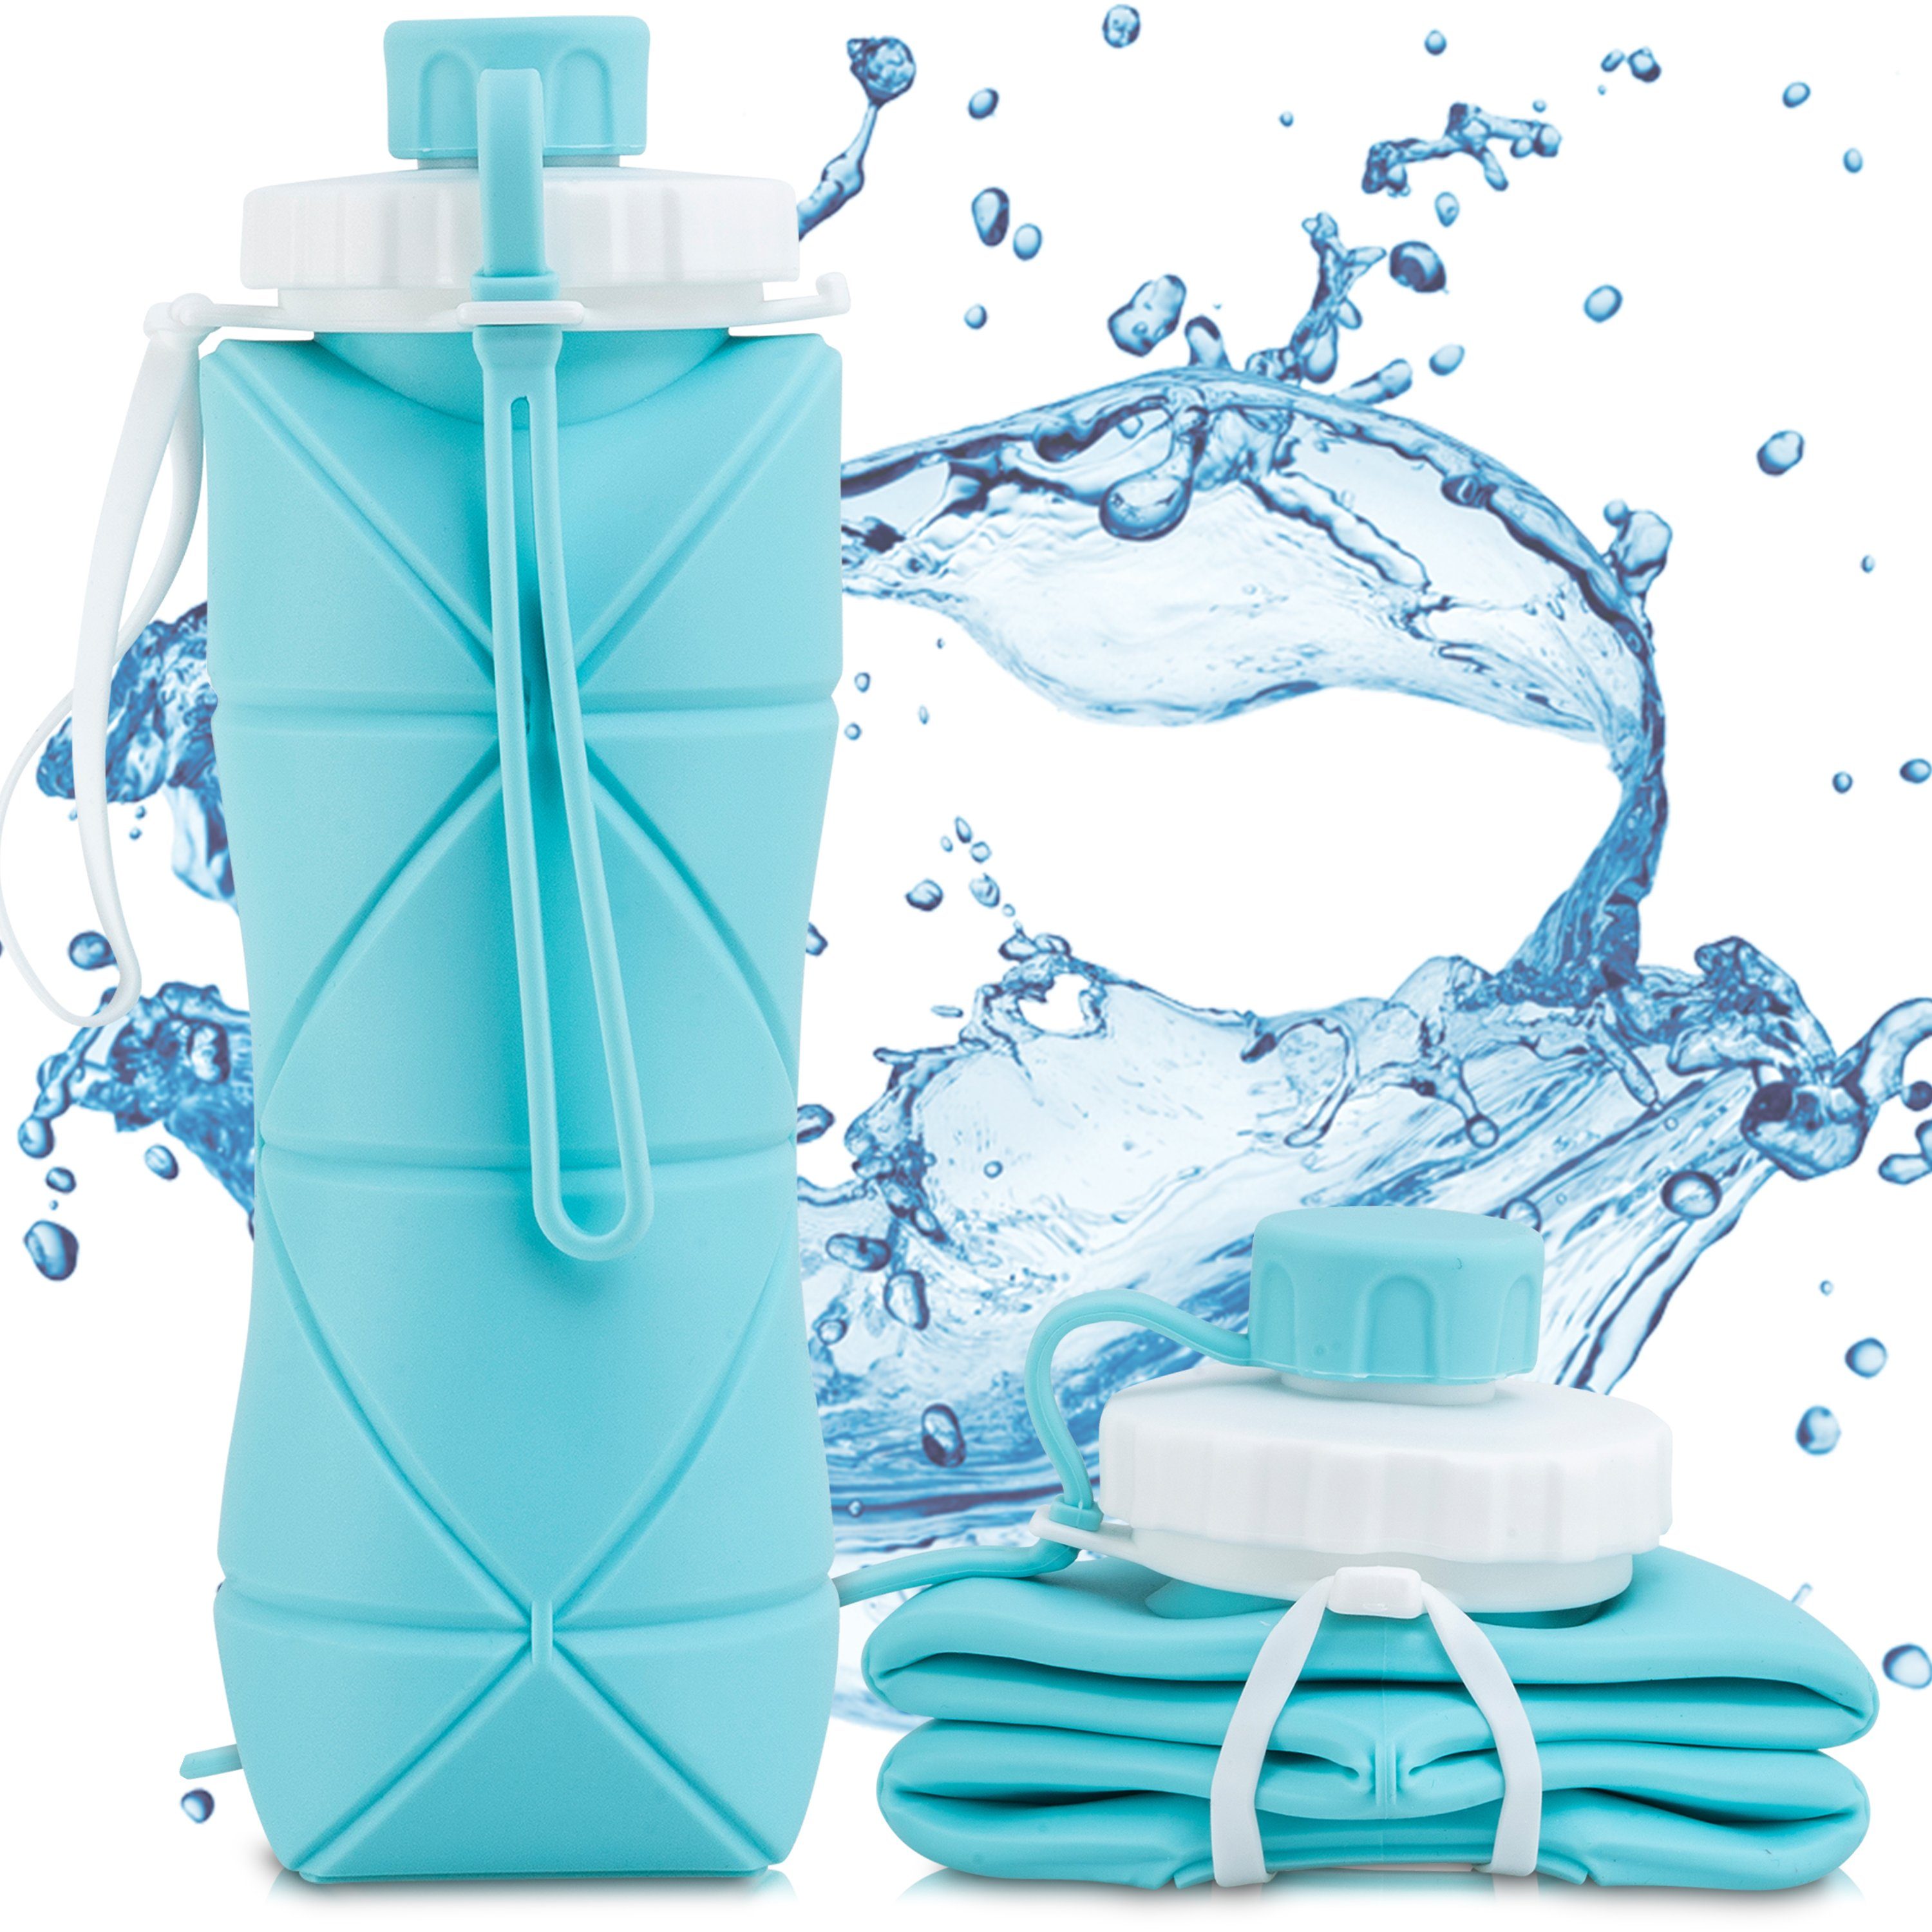 https://i.otto.de/i/otto/7449eafa-8534-565a-b854-5ced6cfe9cfc/perfekto24-trinkflasche-faltbare-trinkflasche-in-blau-wasserflasche-aus-silikon-600ml.jpg?$formatz$